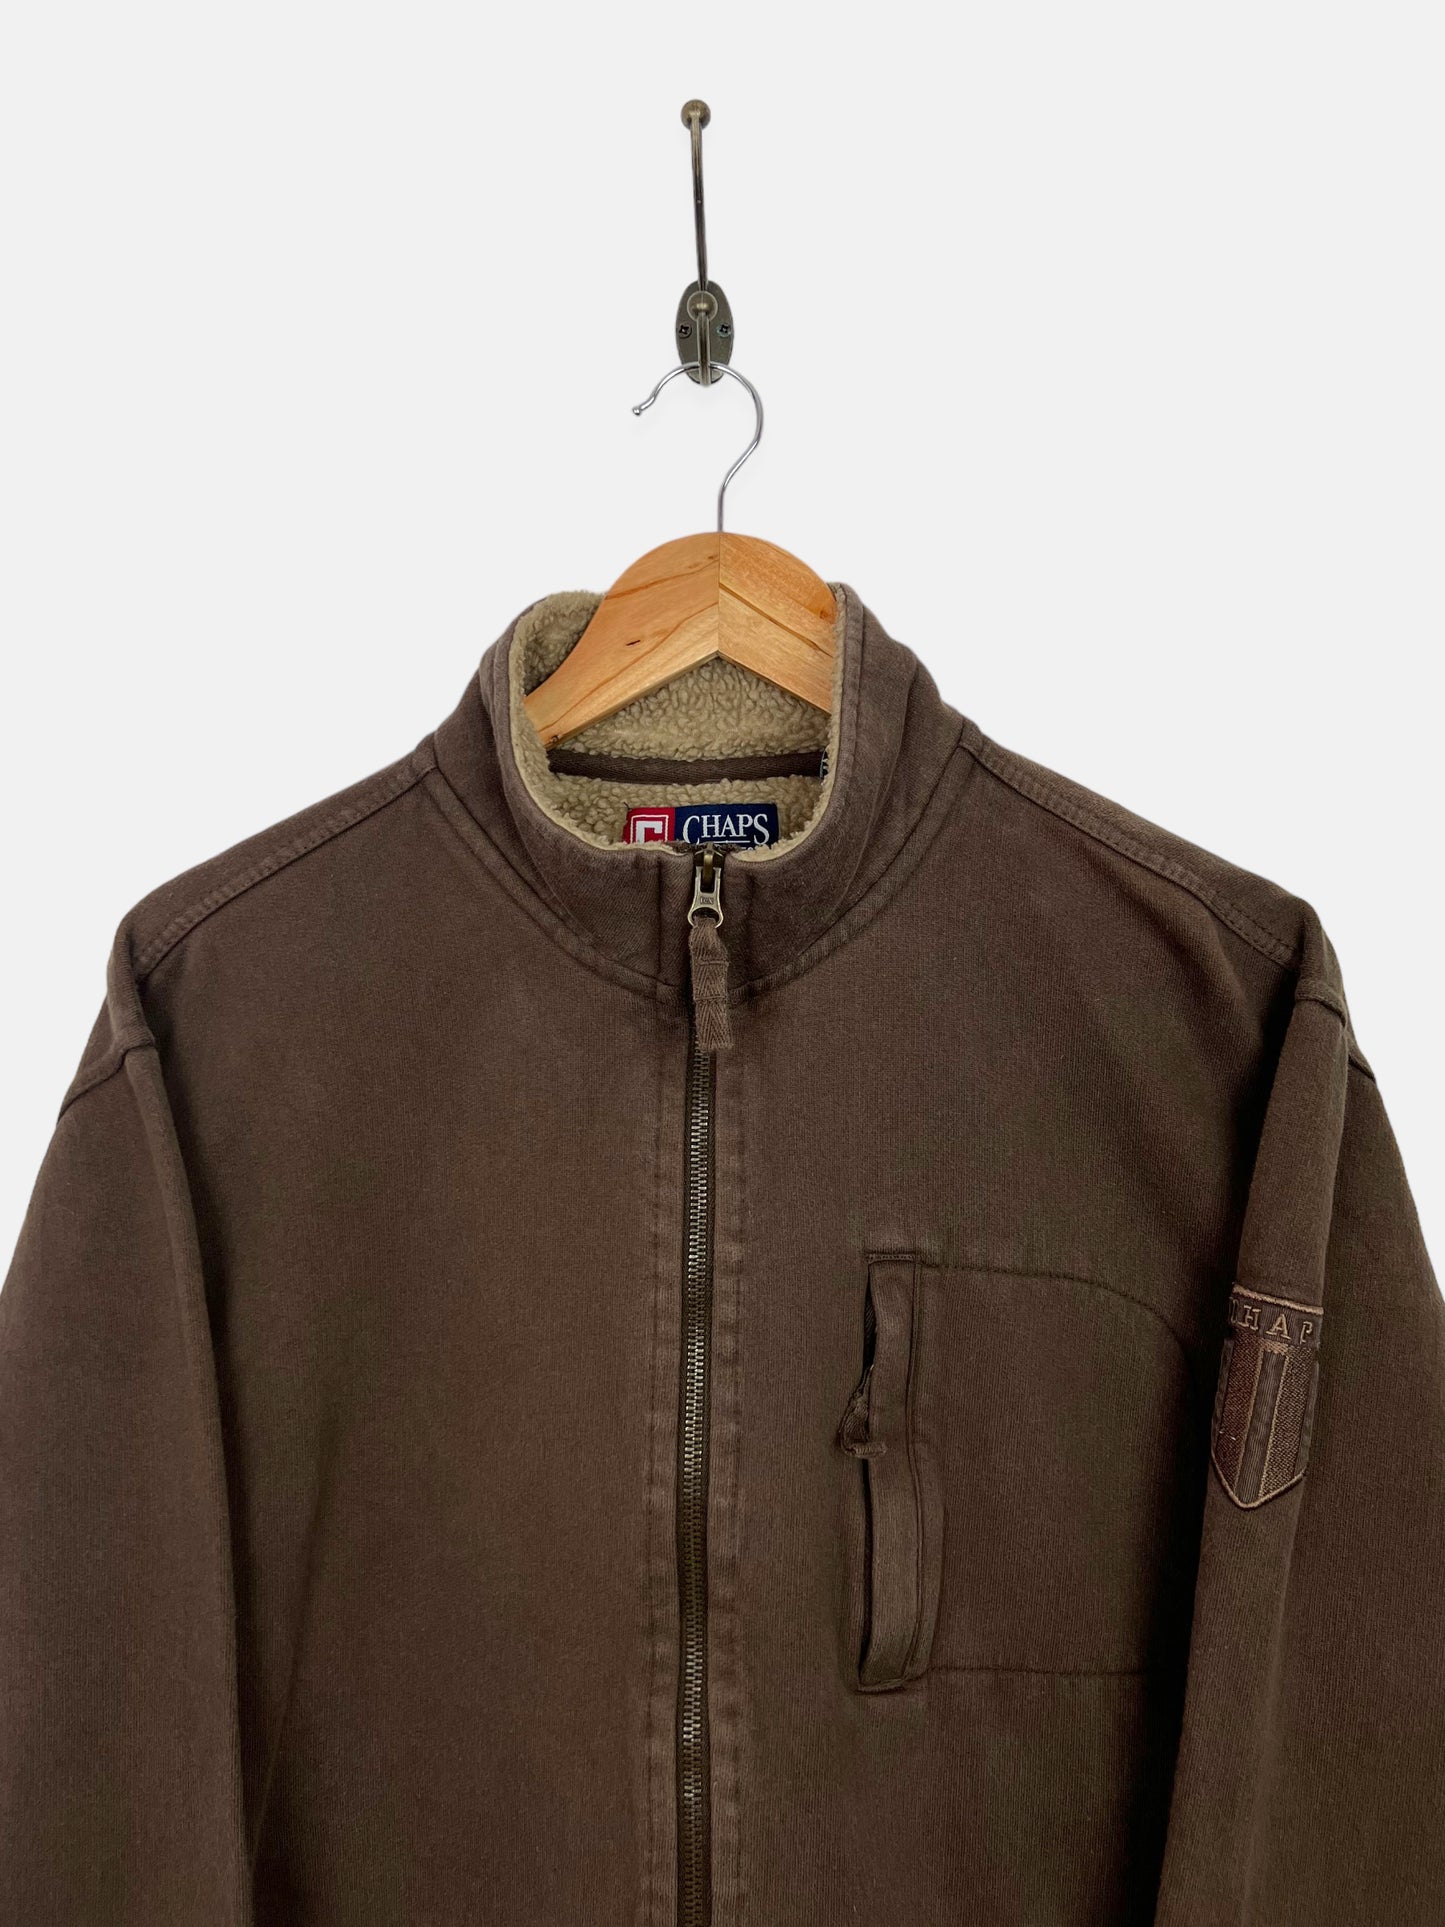 90's Chaps Embroidered Vintage Zip-Up Sweatshirt/Jacket Size M